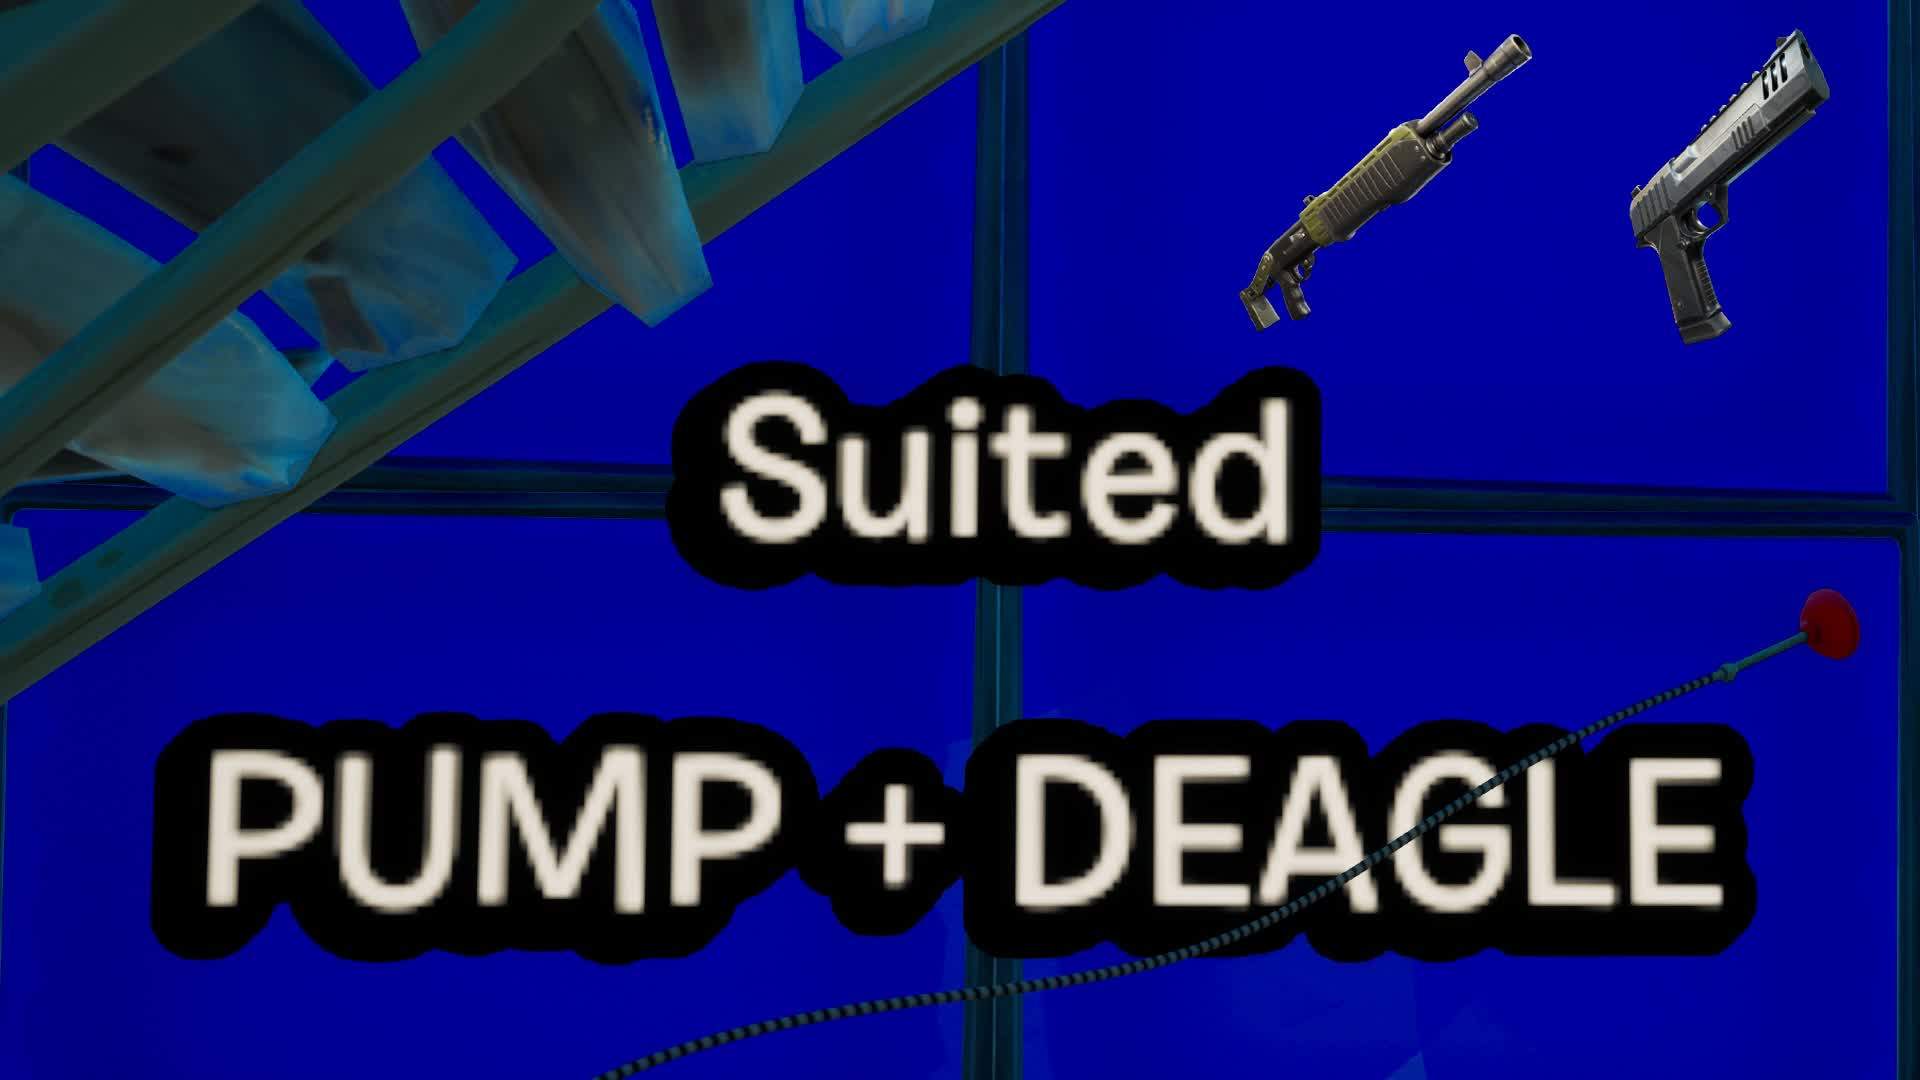 SUITED PUMP + DEAGLE